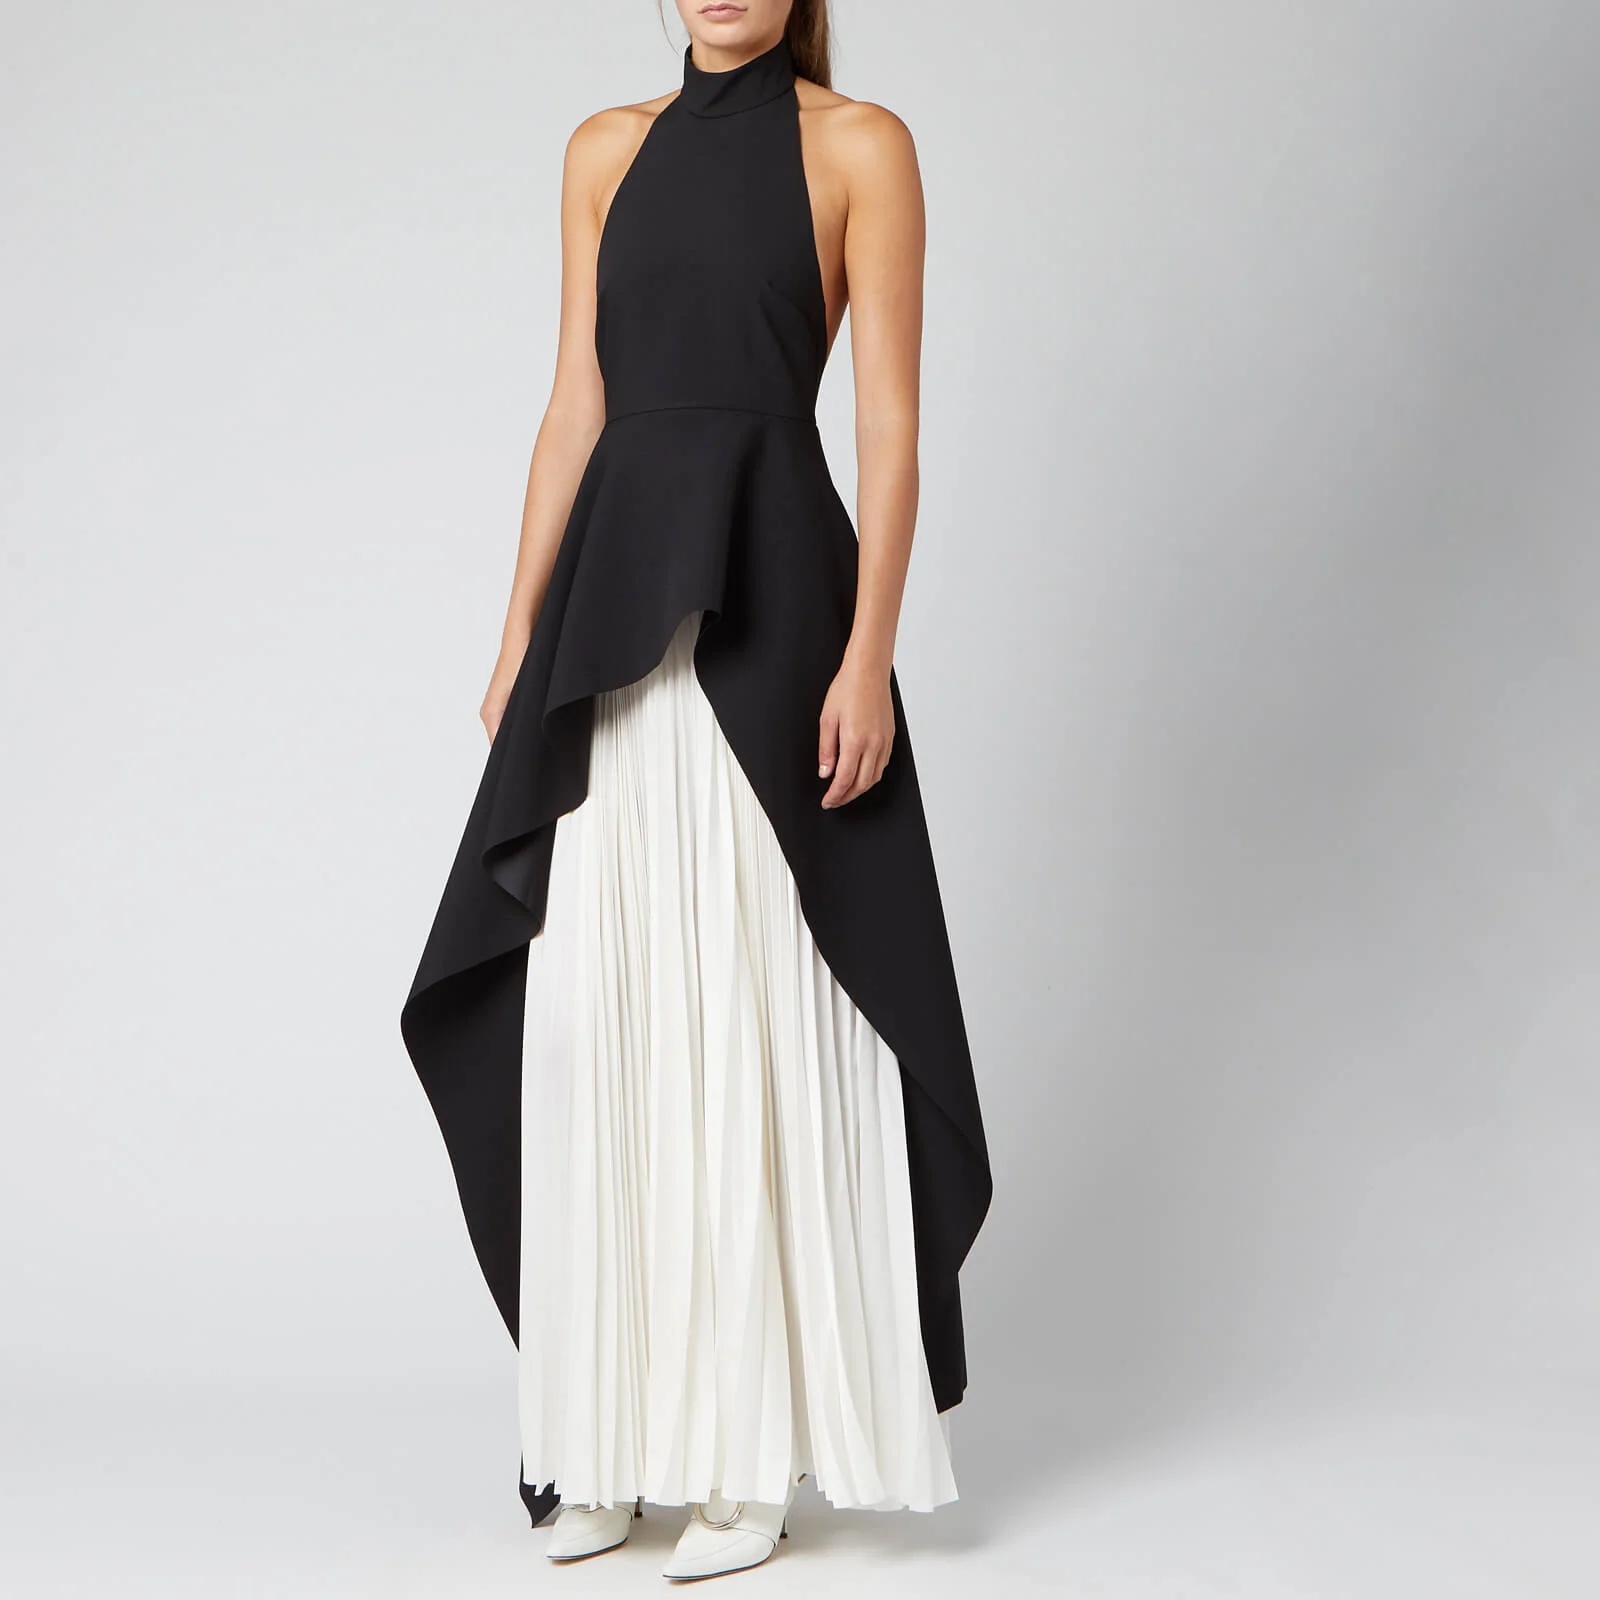 Solace London Women's Lavinia Maxi Dress - Black/Cream Image 1